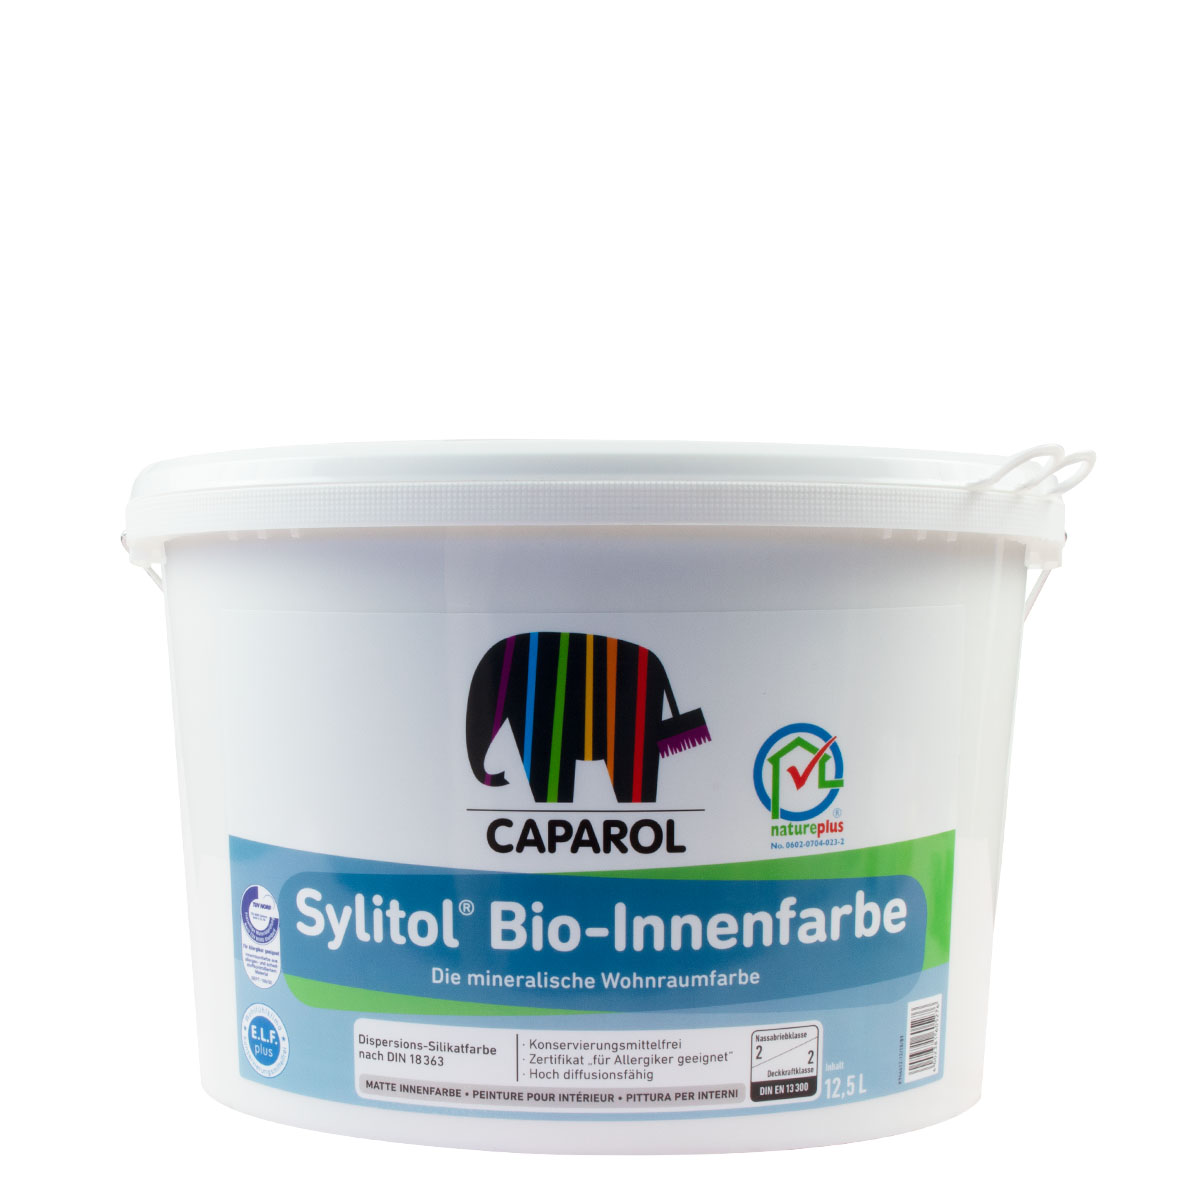 Caparol Sylitol Bio Innenfarbe 12,5L MIX PG A Allergiker geeignet